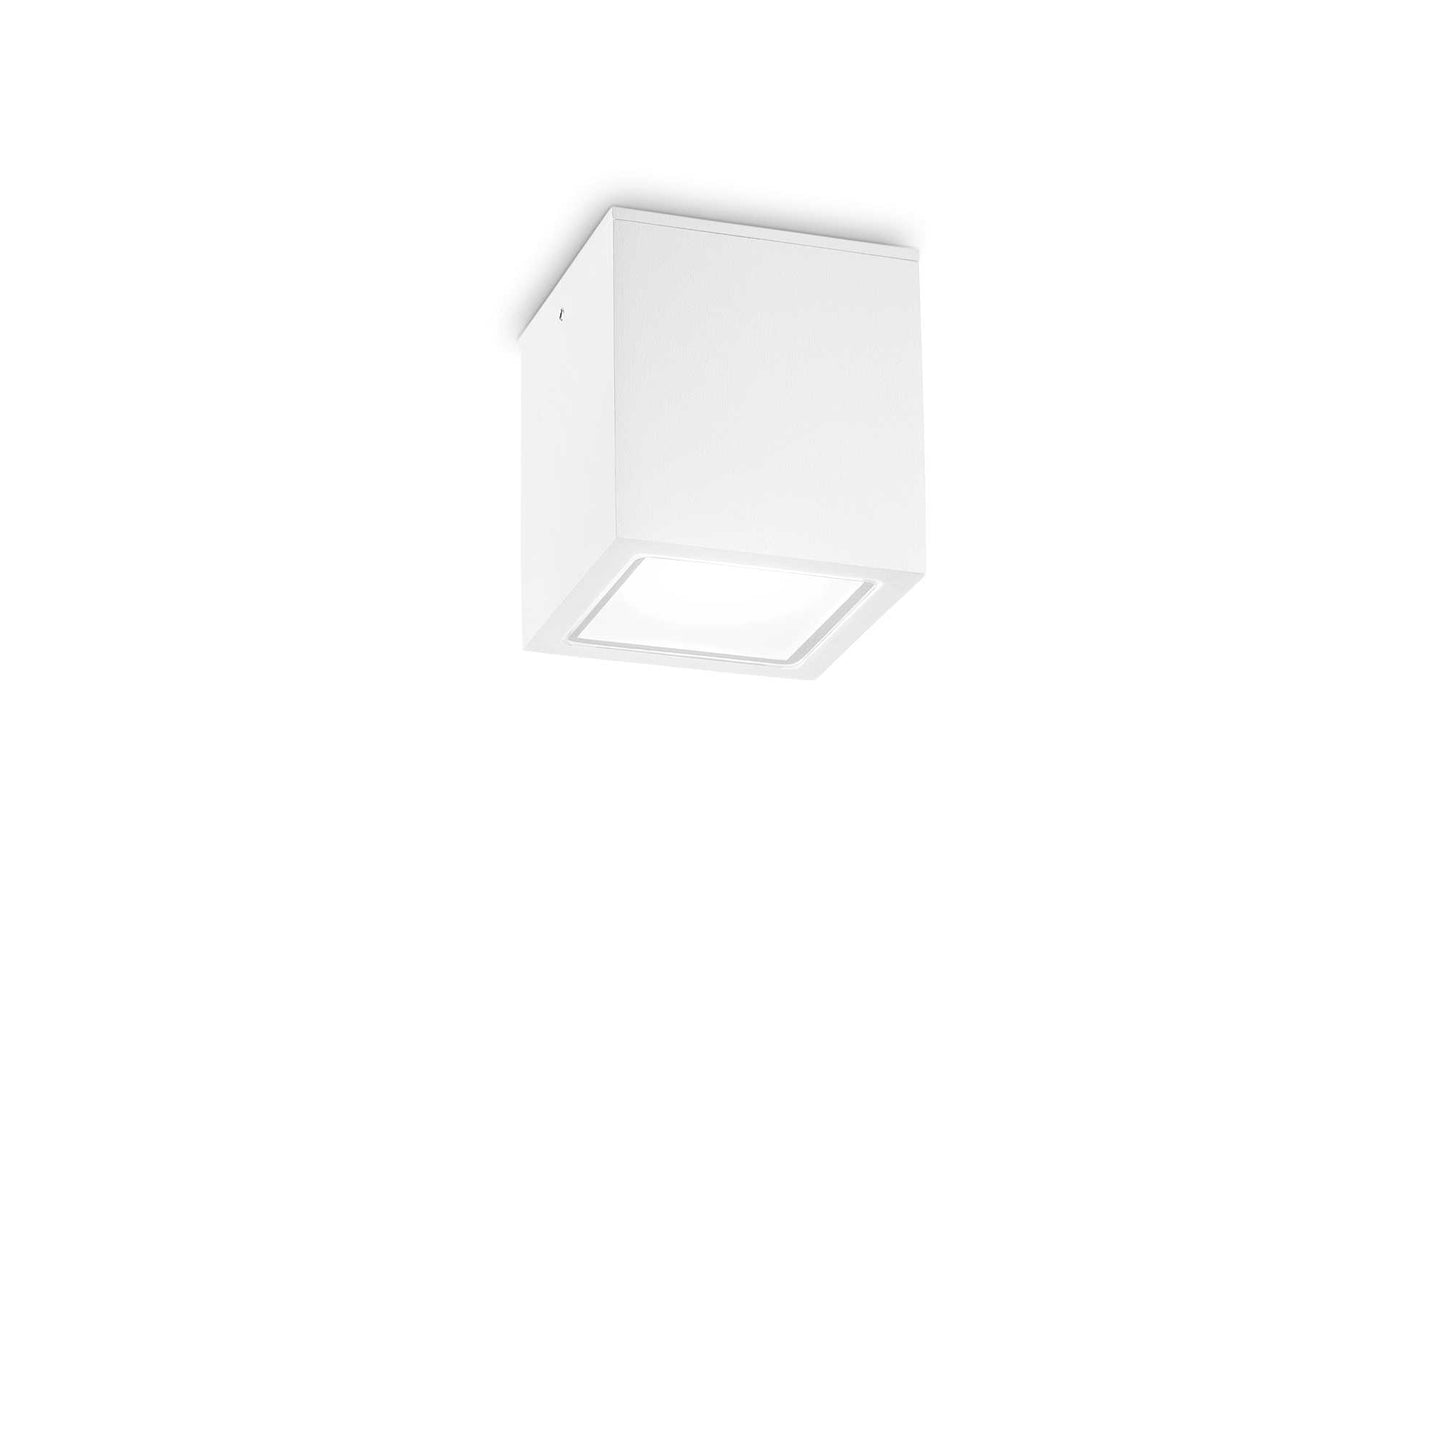 White Whateal Lux 251561 Techo Small Gu10 LED IP54 Moderne Decke